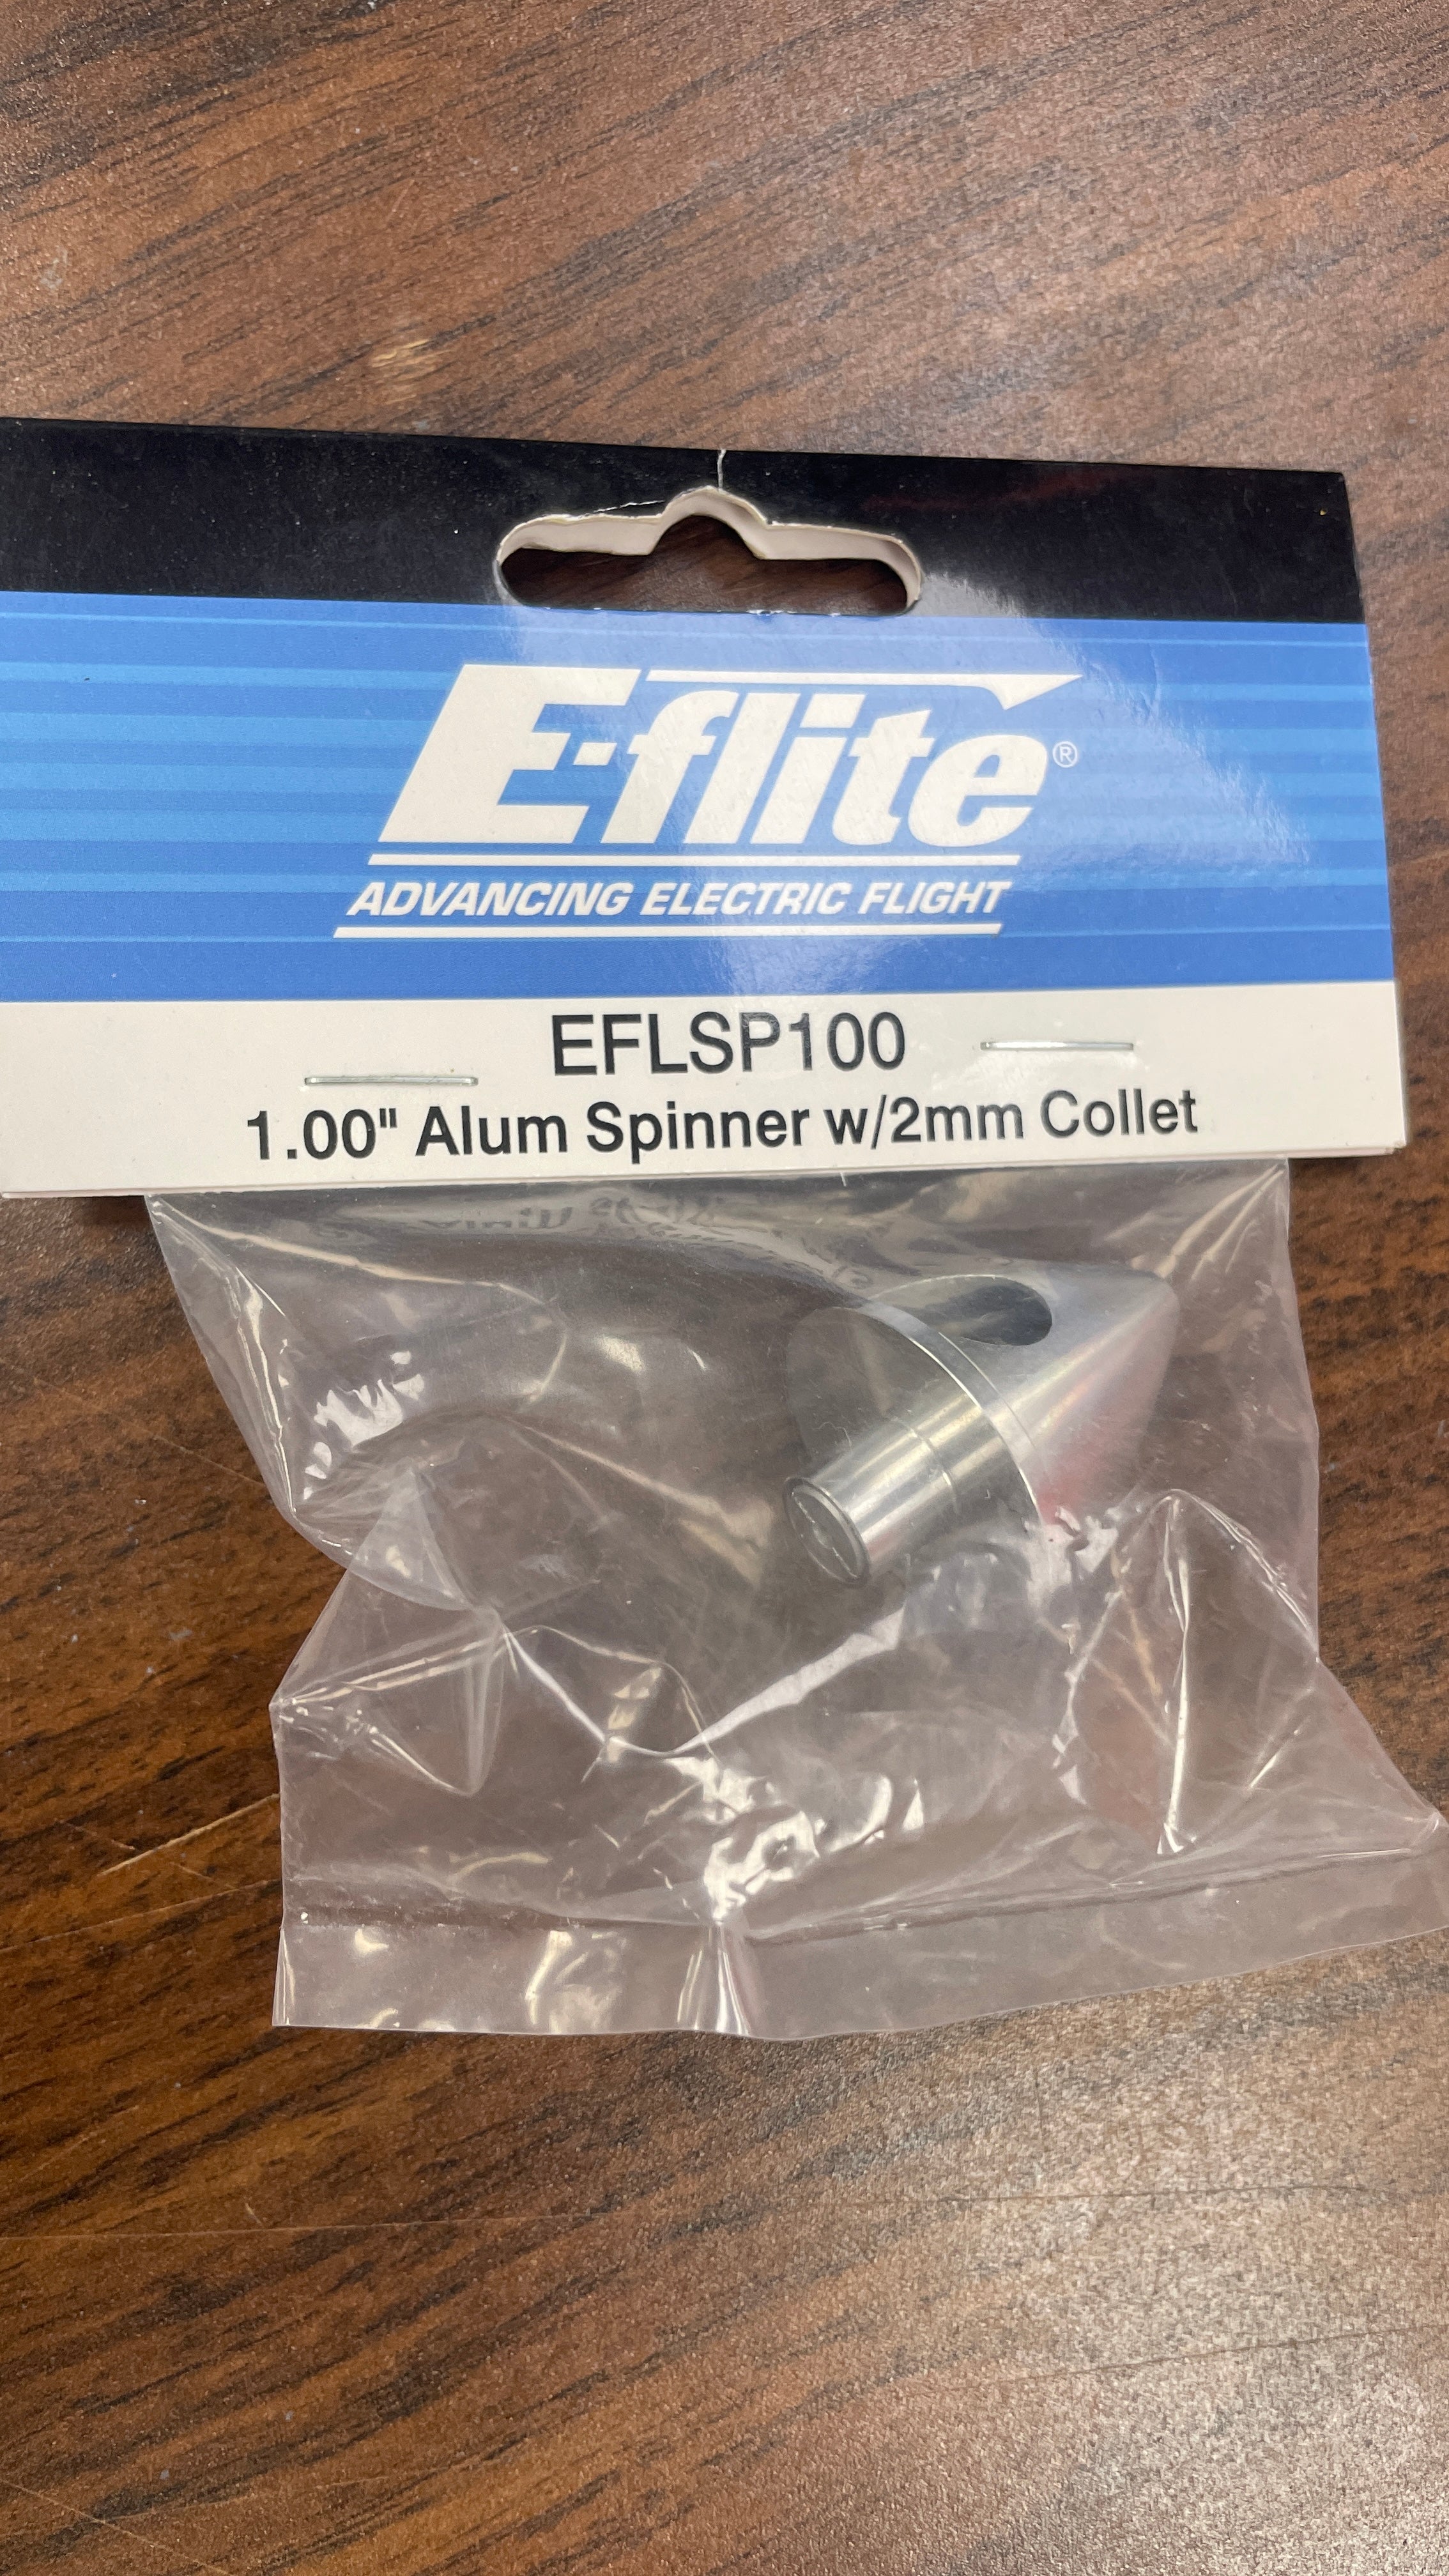 Rueda giratoria de aluminio E-flite de 1,00" con boquilla de 2 mm *Archivado